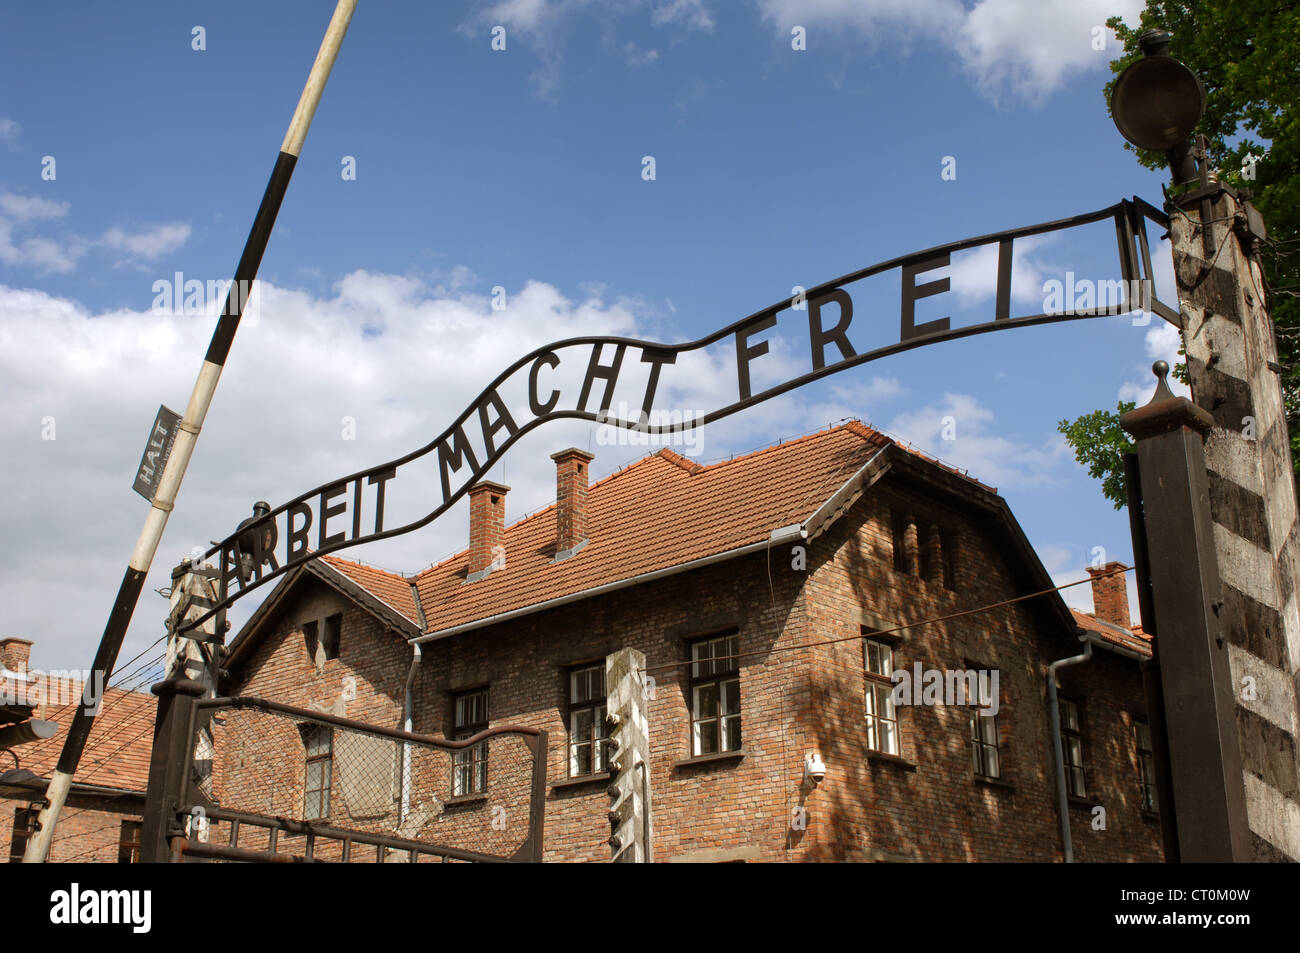 Motto Arbeit macht frei work makes free Auschwitz I Stock Photo